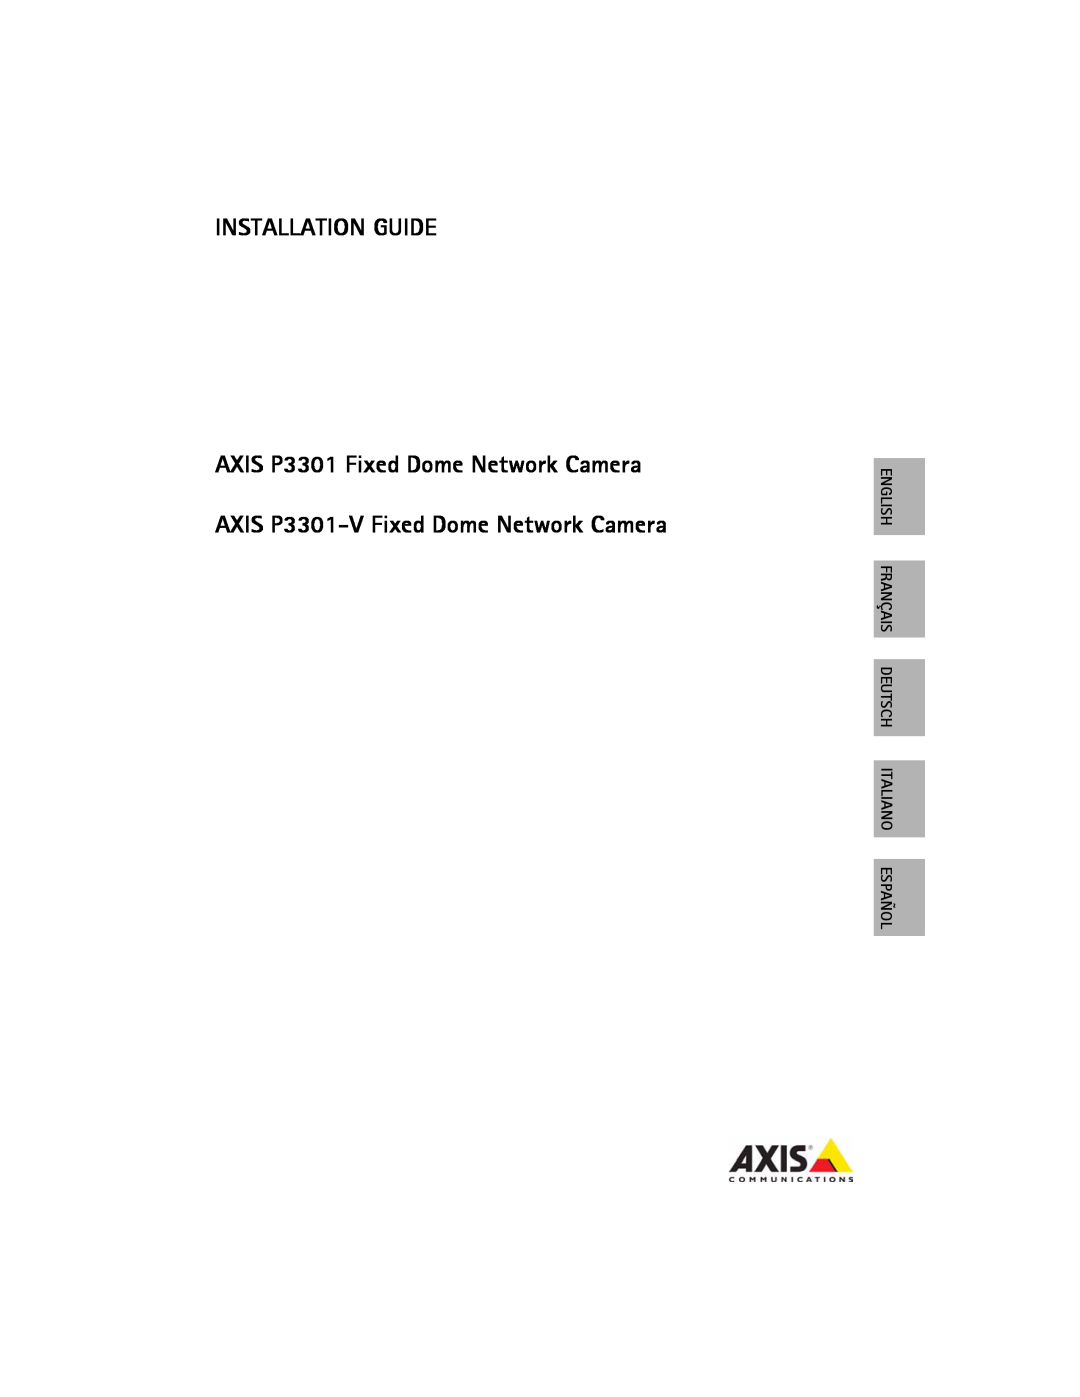 Axis Communications AXIS P3301-V manual Installation Guide, English Français Deutsch Italiano Español 